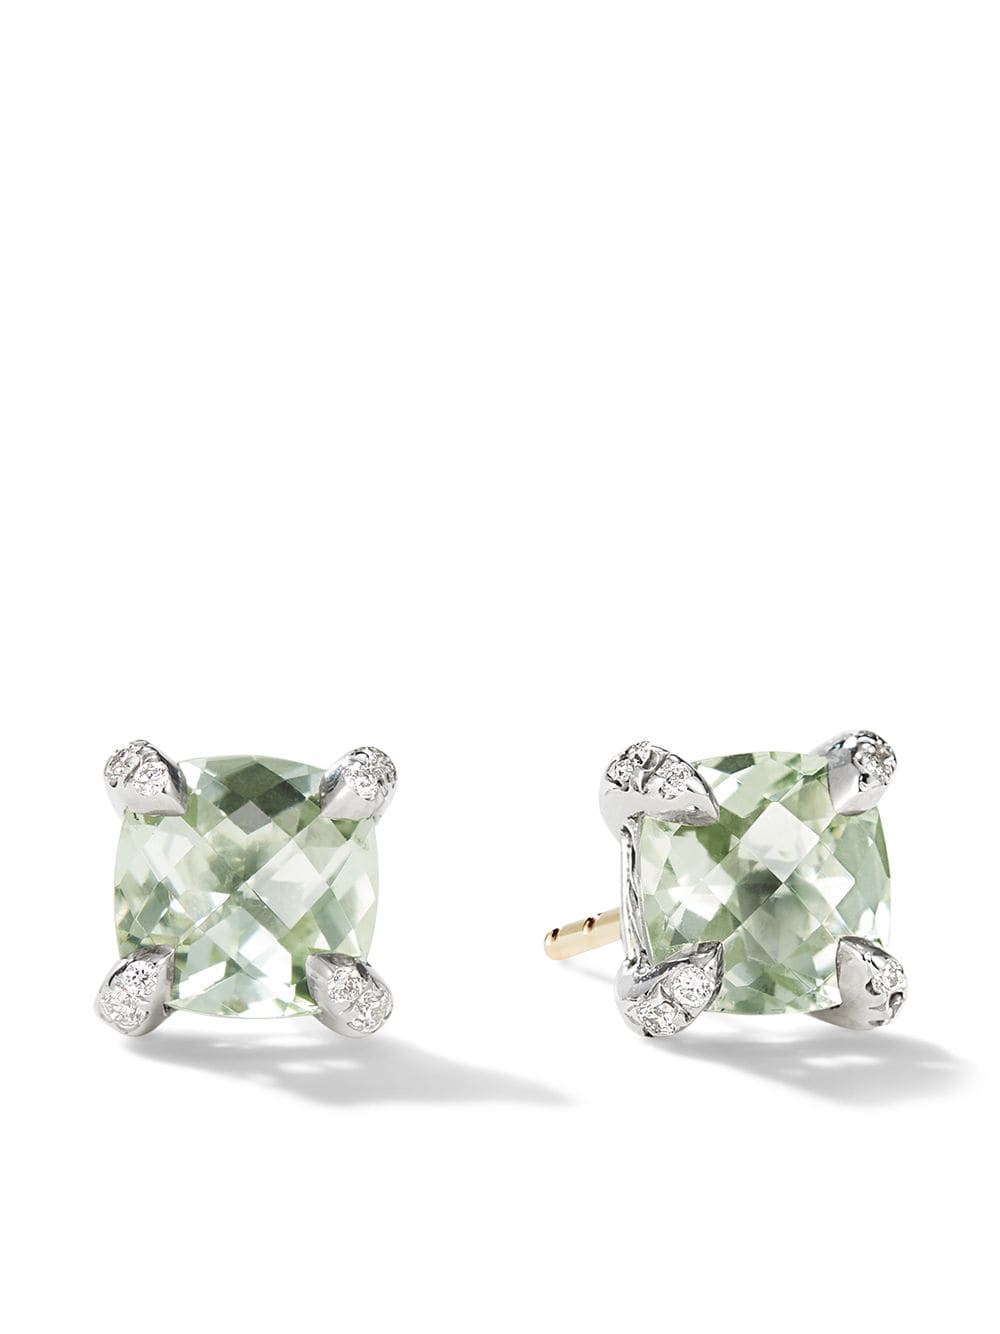 David Yurman sterling silver Petite Chatelaine prasiolite and diamond stud earrings - Green von David Yurman